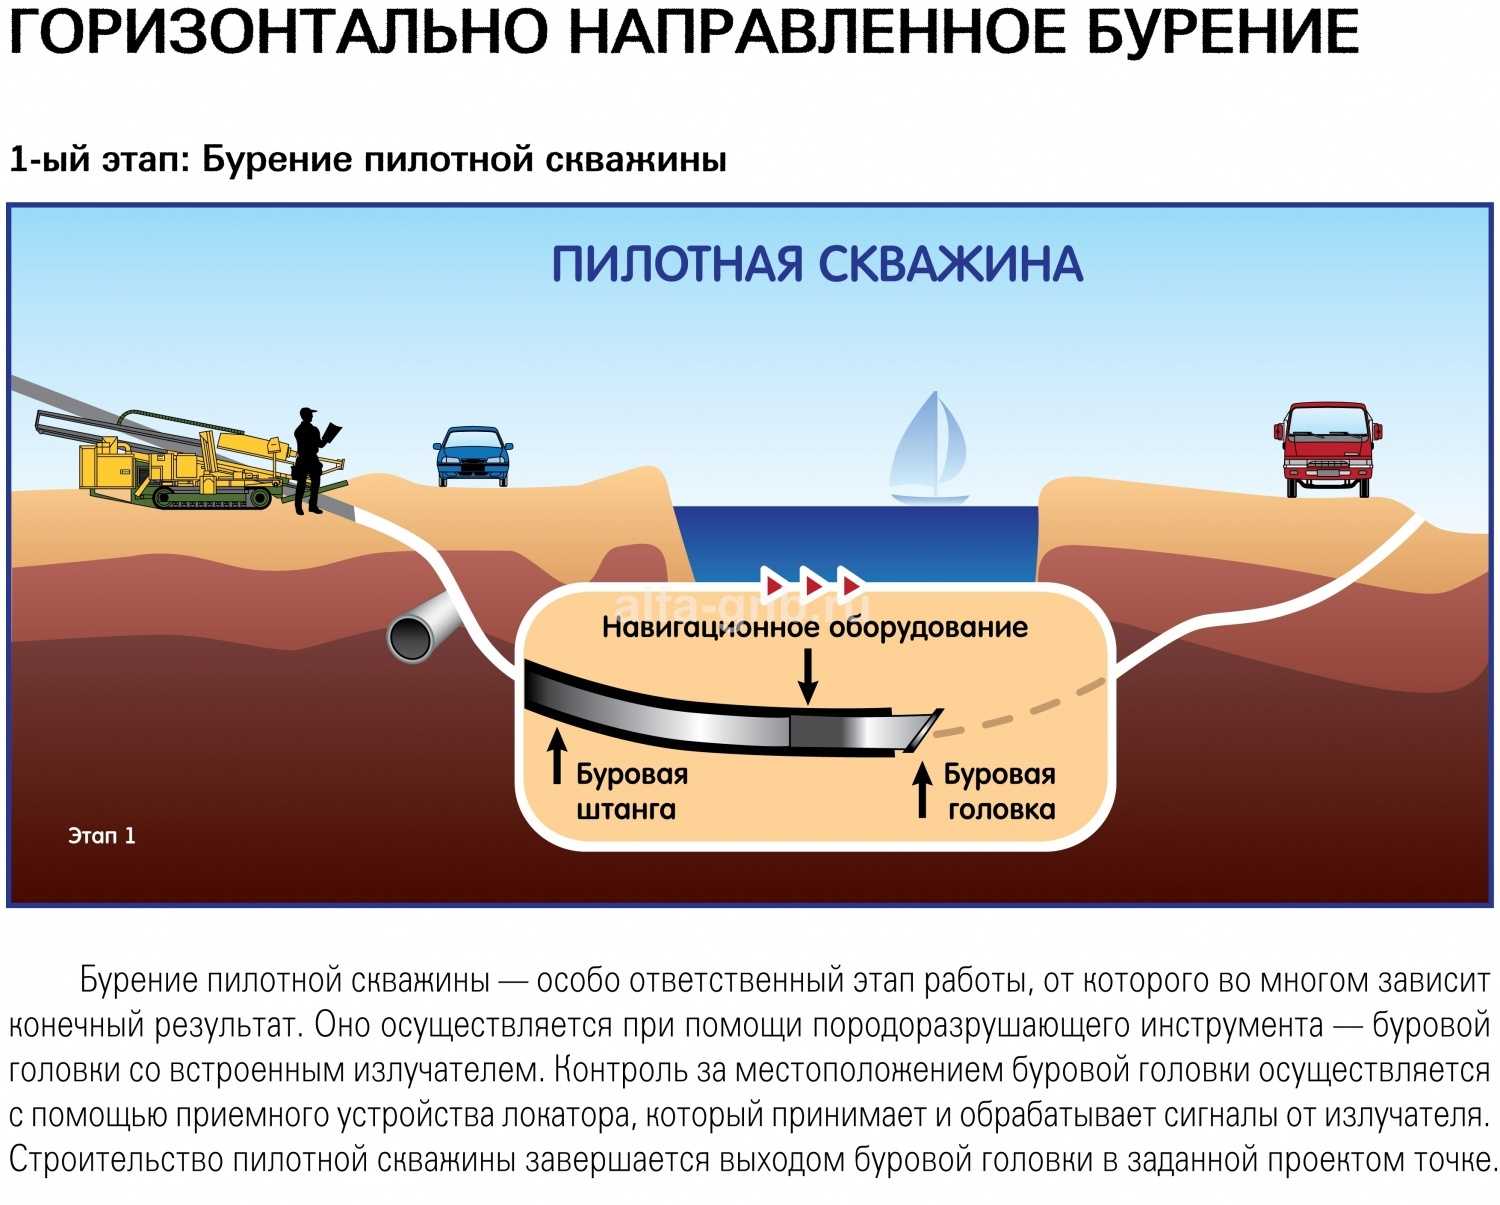 Прокладка трубопровода методом гнб|плюсы и минусы - rusgnb.ru